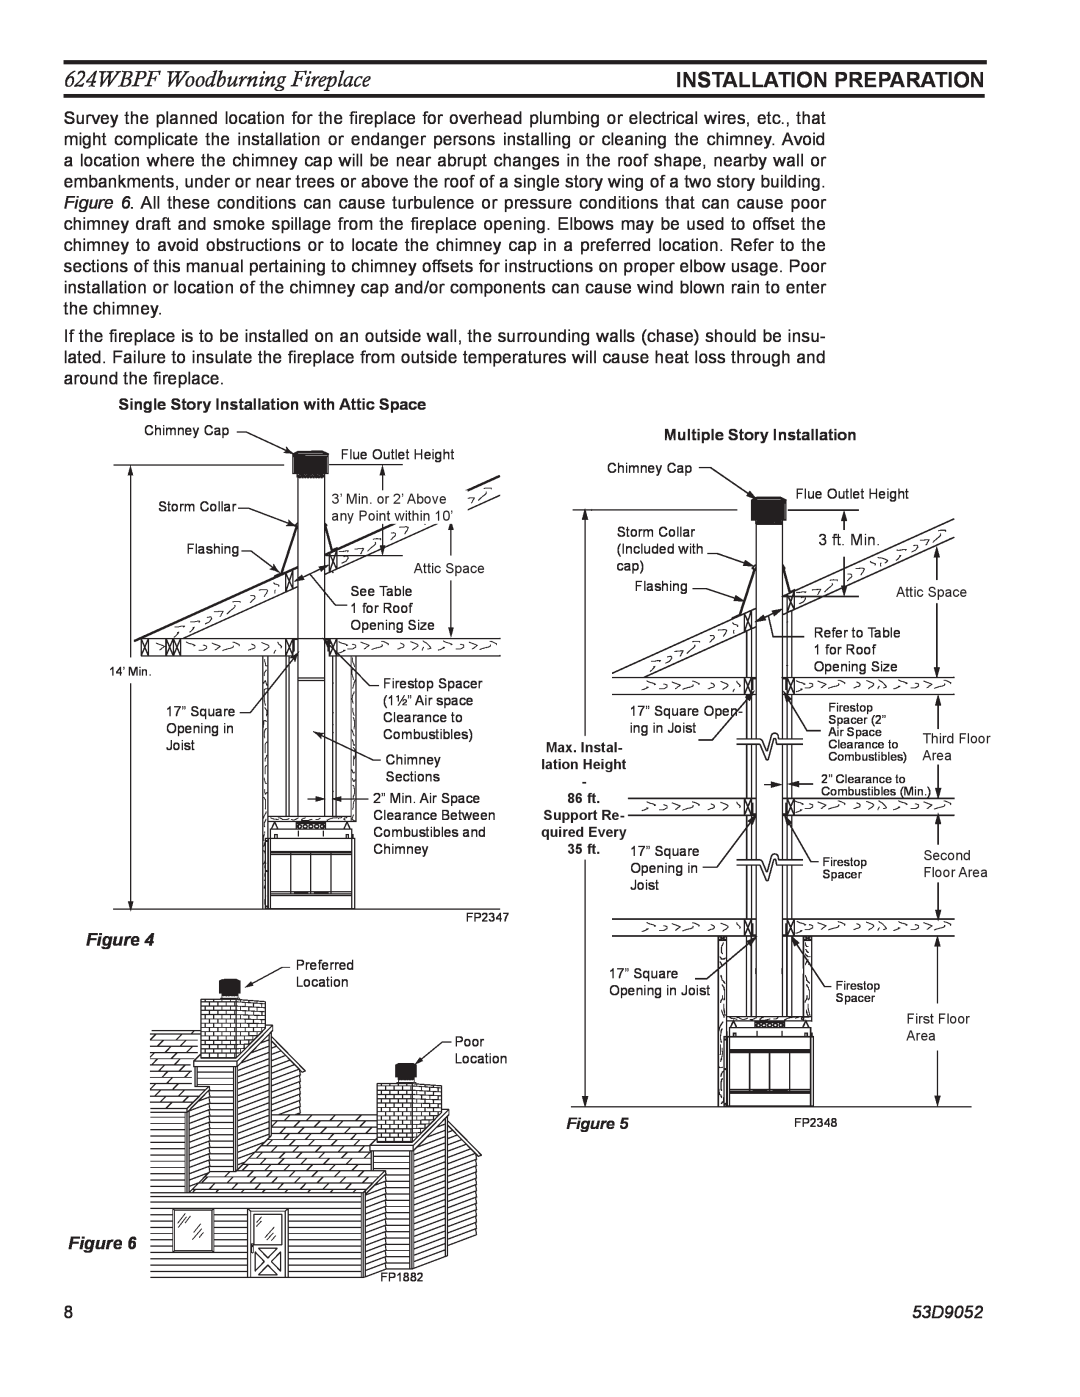 Monessen Hearth manual 624WBPF Woodburning Fireplace, Installation Preparation, 53D9052, Multiple Story Installation 